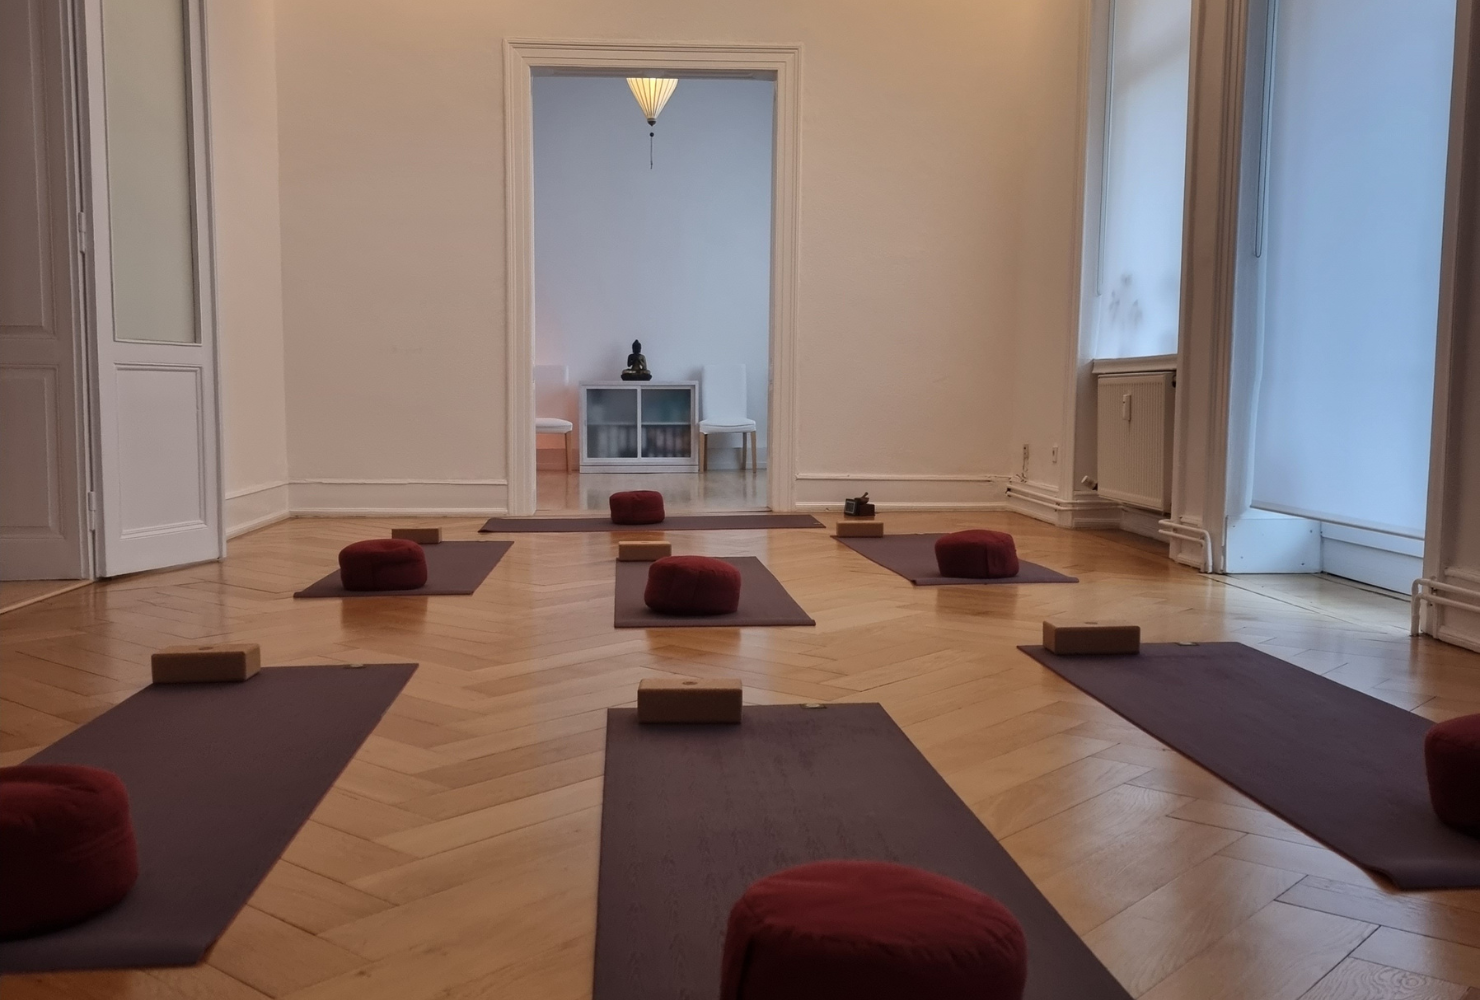 Bild 7 myyoga - Yoga in Wiesbaden in Wiesbaden